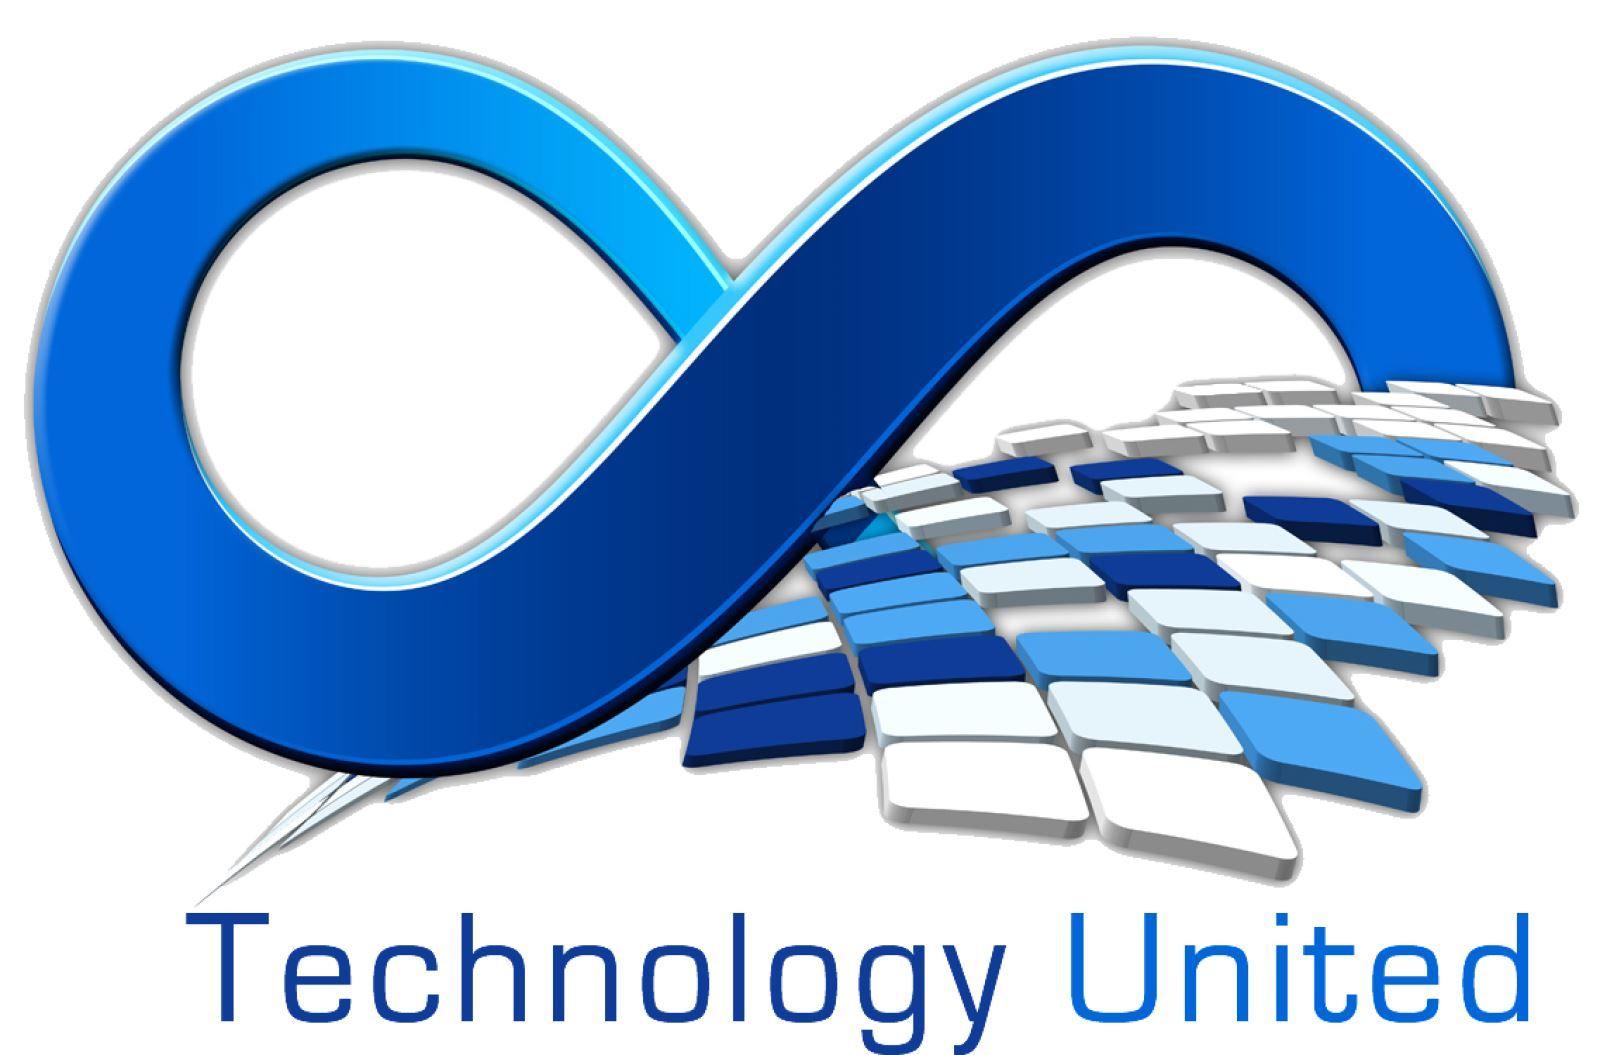 American Information Technology Company Logo - Information technology Logos